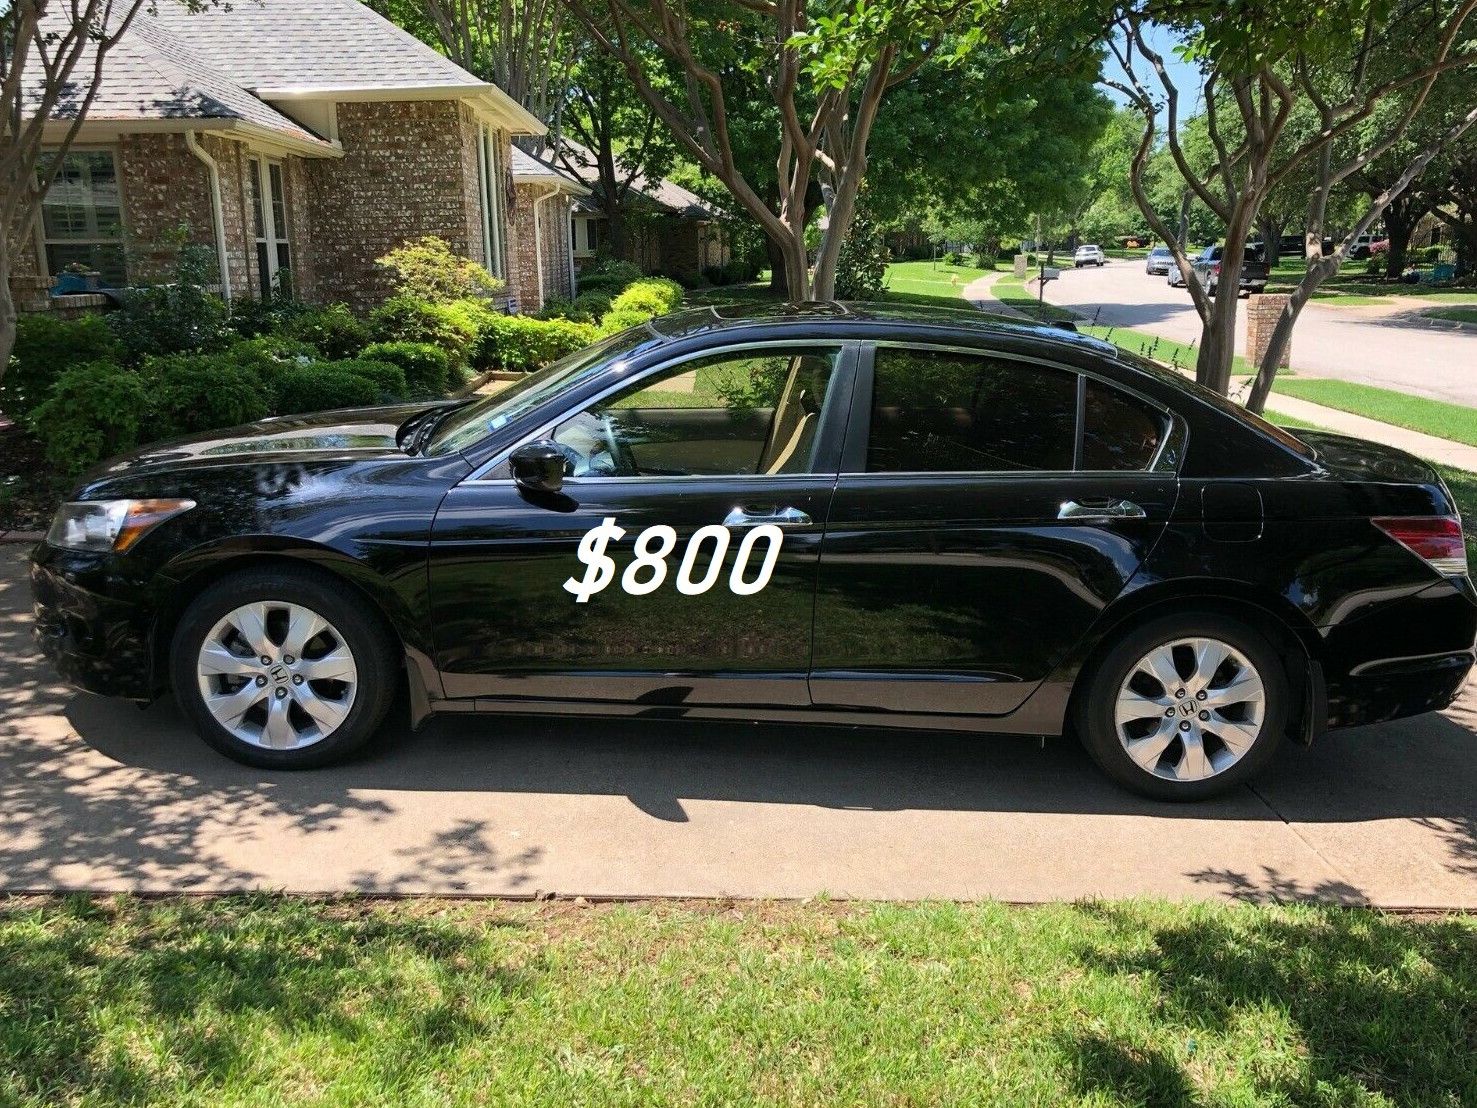 🍁🔥$8OO URGENT I sell my family car 2OO9 Honda Accord Sedan V6 EX-L 𝓹𝓸𝔀𝓮𝓻 𝓢𝓽𝓪𝓻𝓽 Runs and drives very smooth.🍁🔥